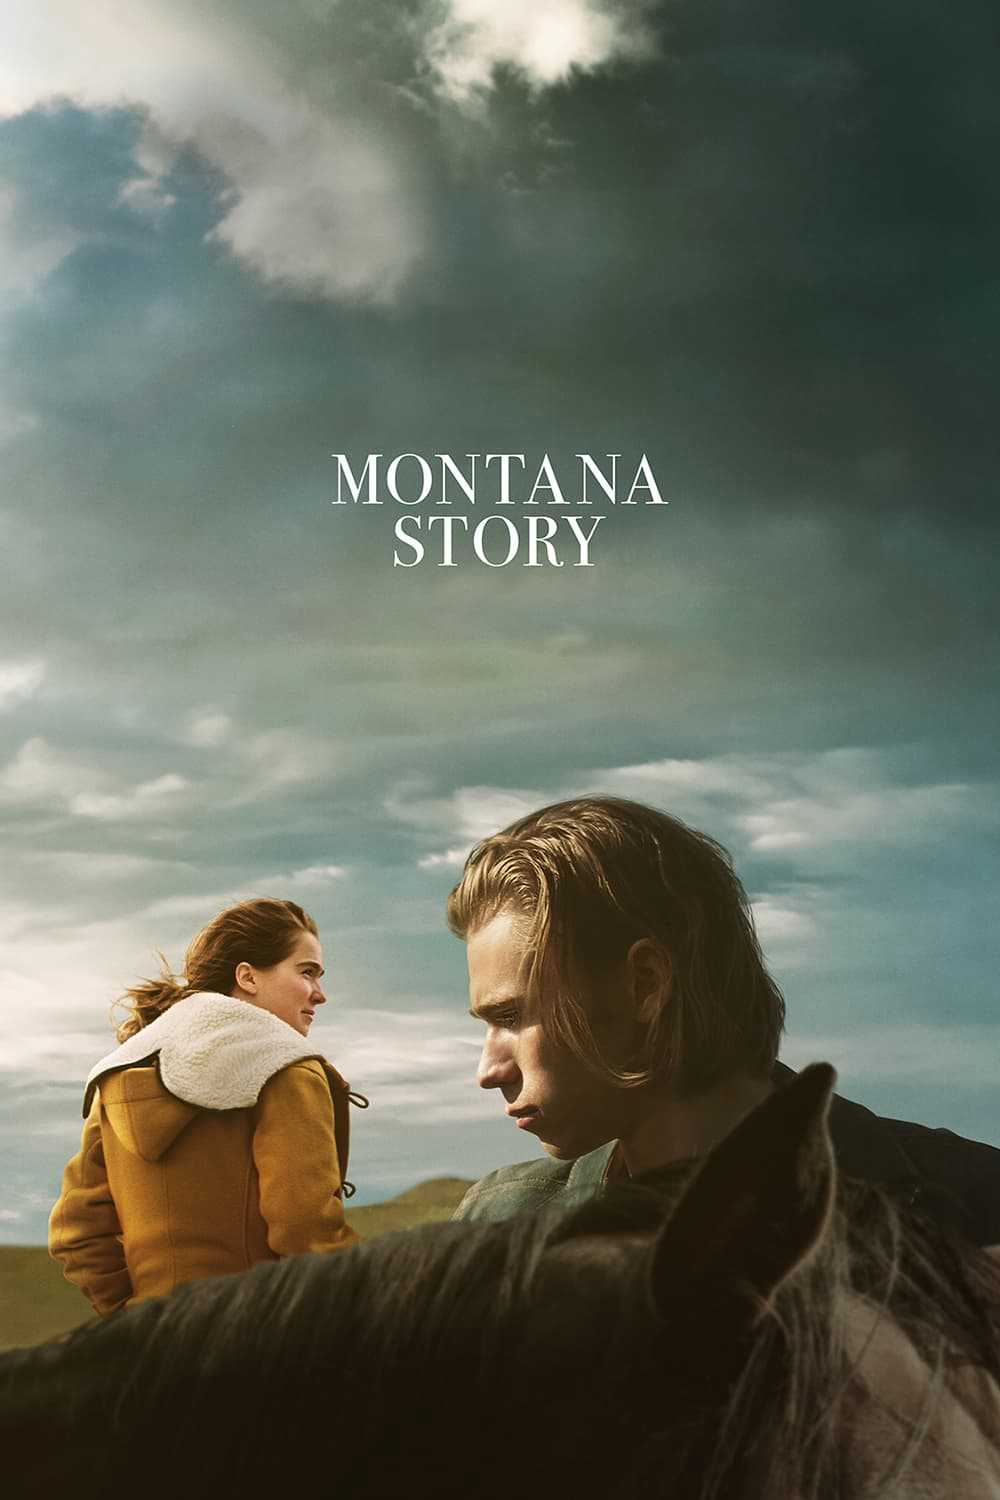 Montana story - Montana story